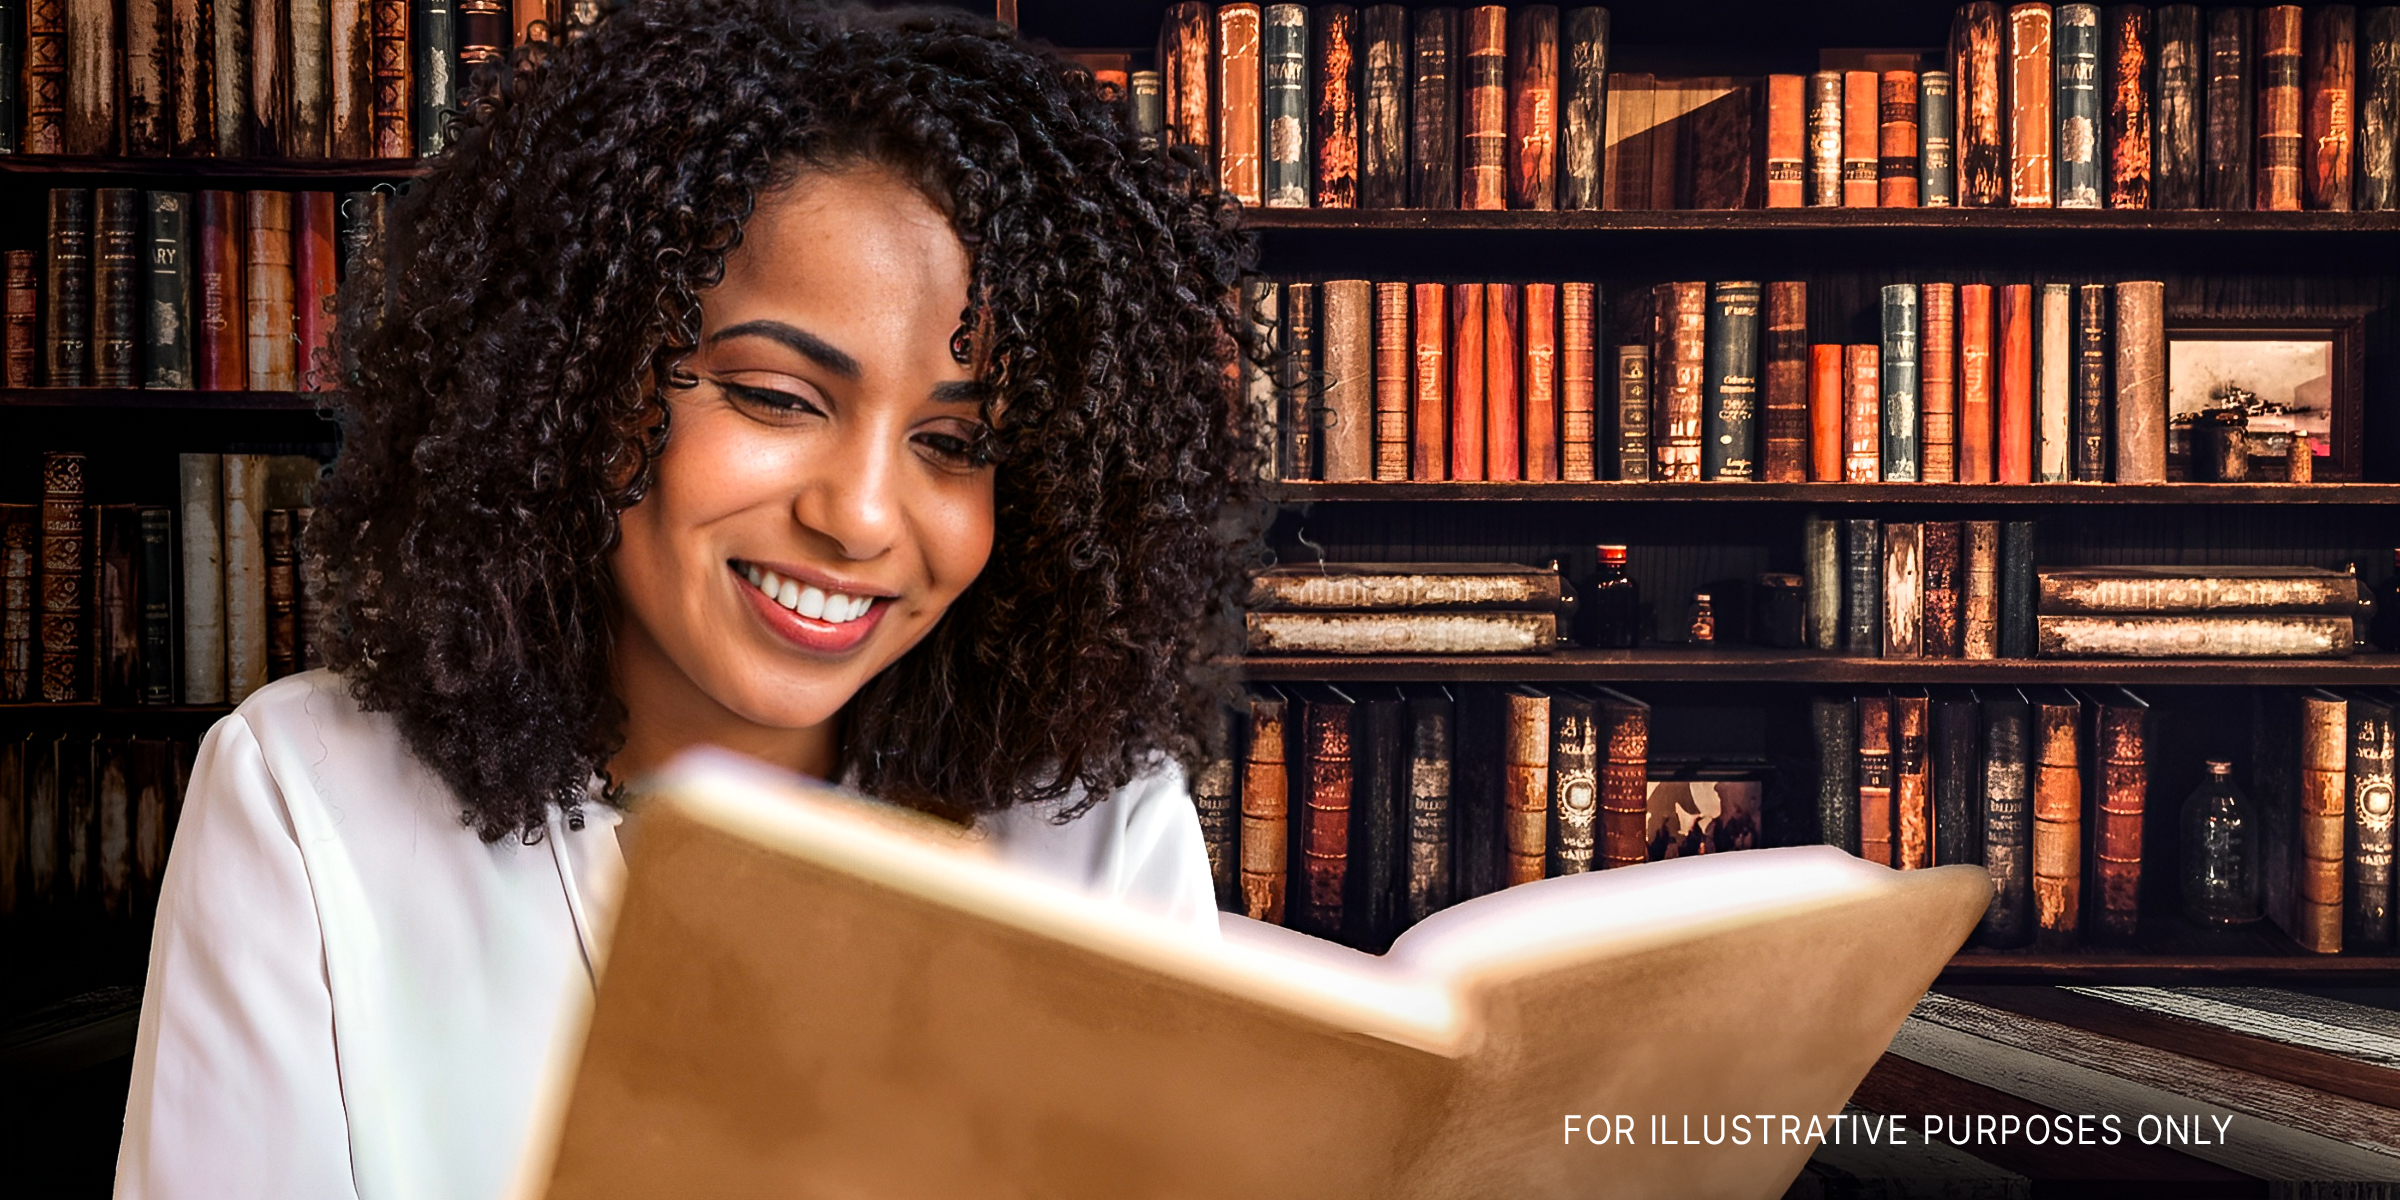 A woman reading a book | Source: Shutterstock